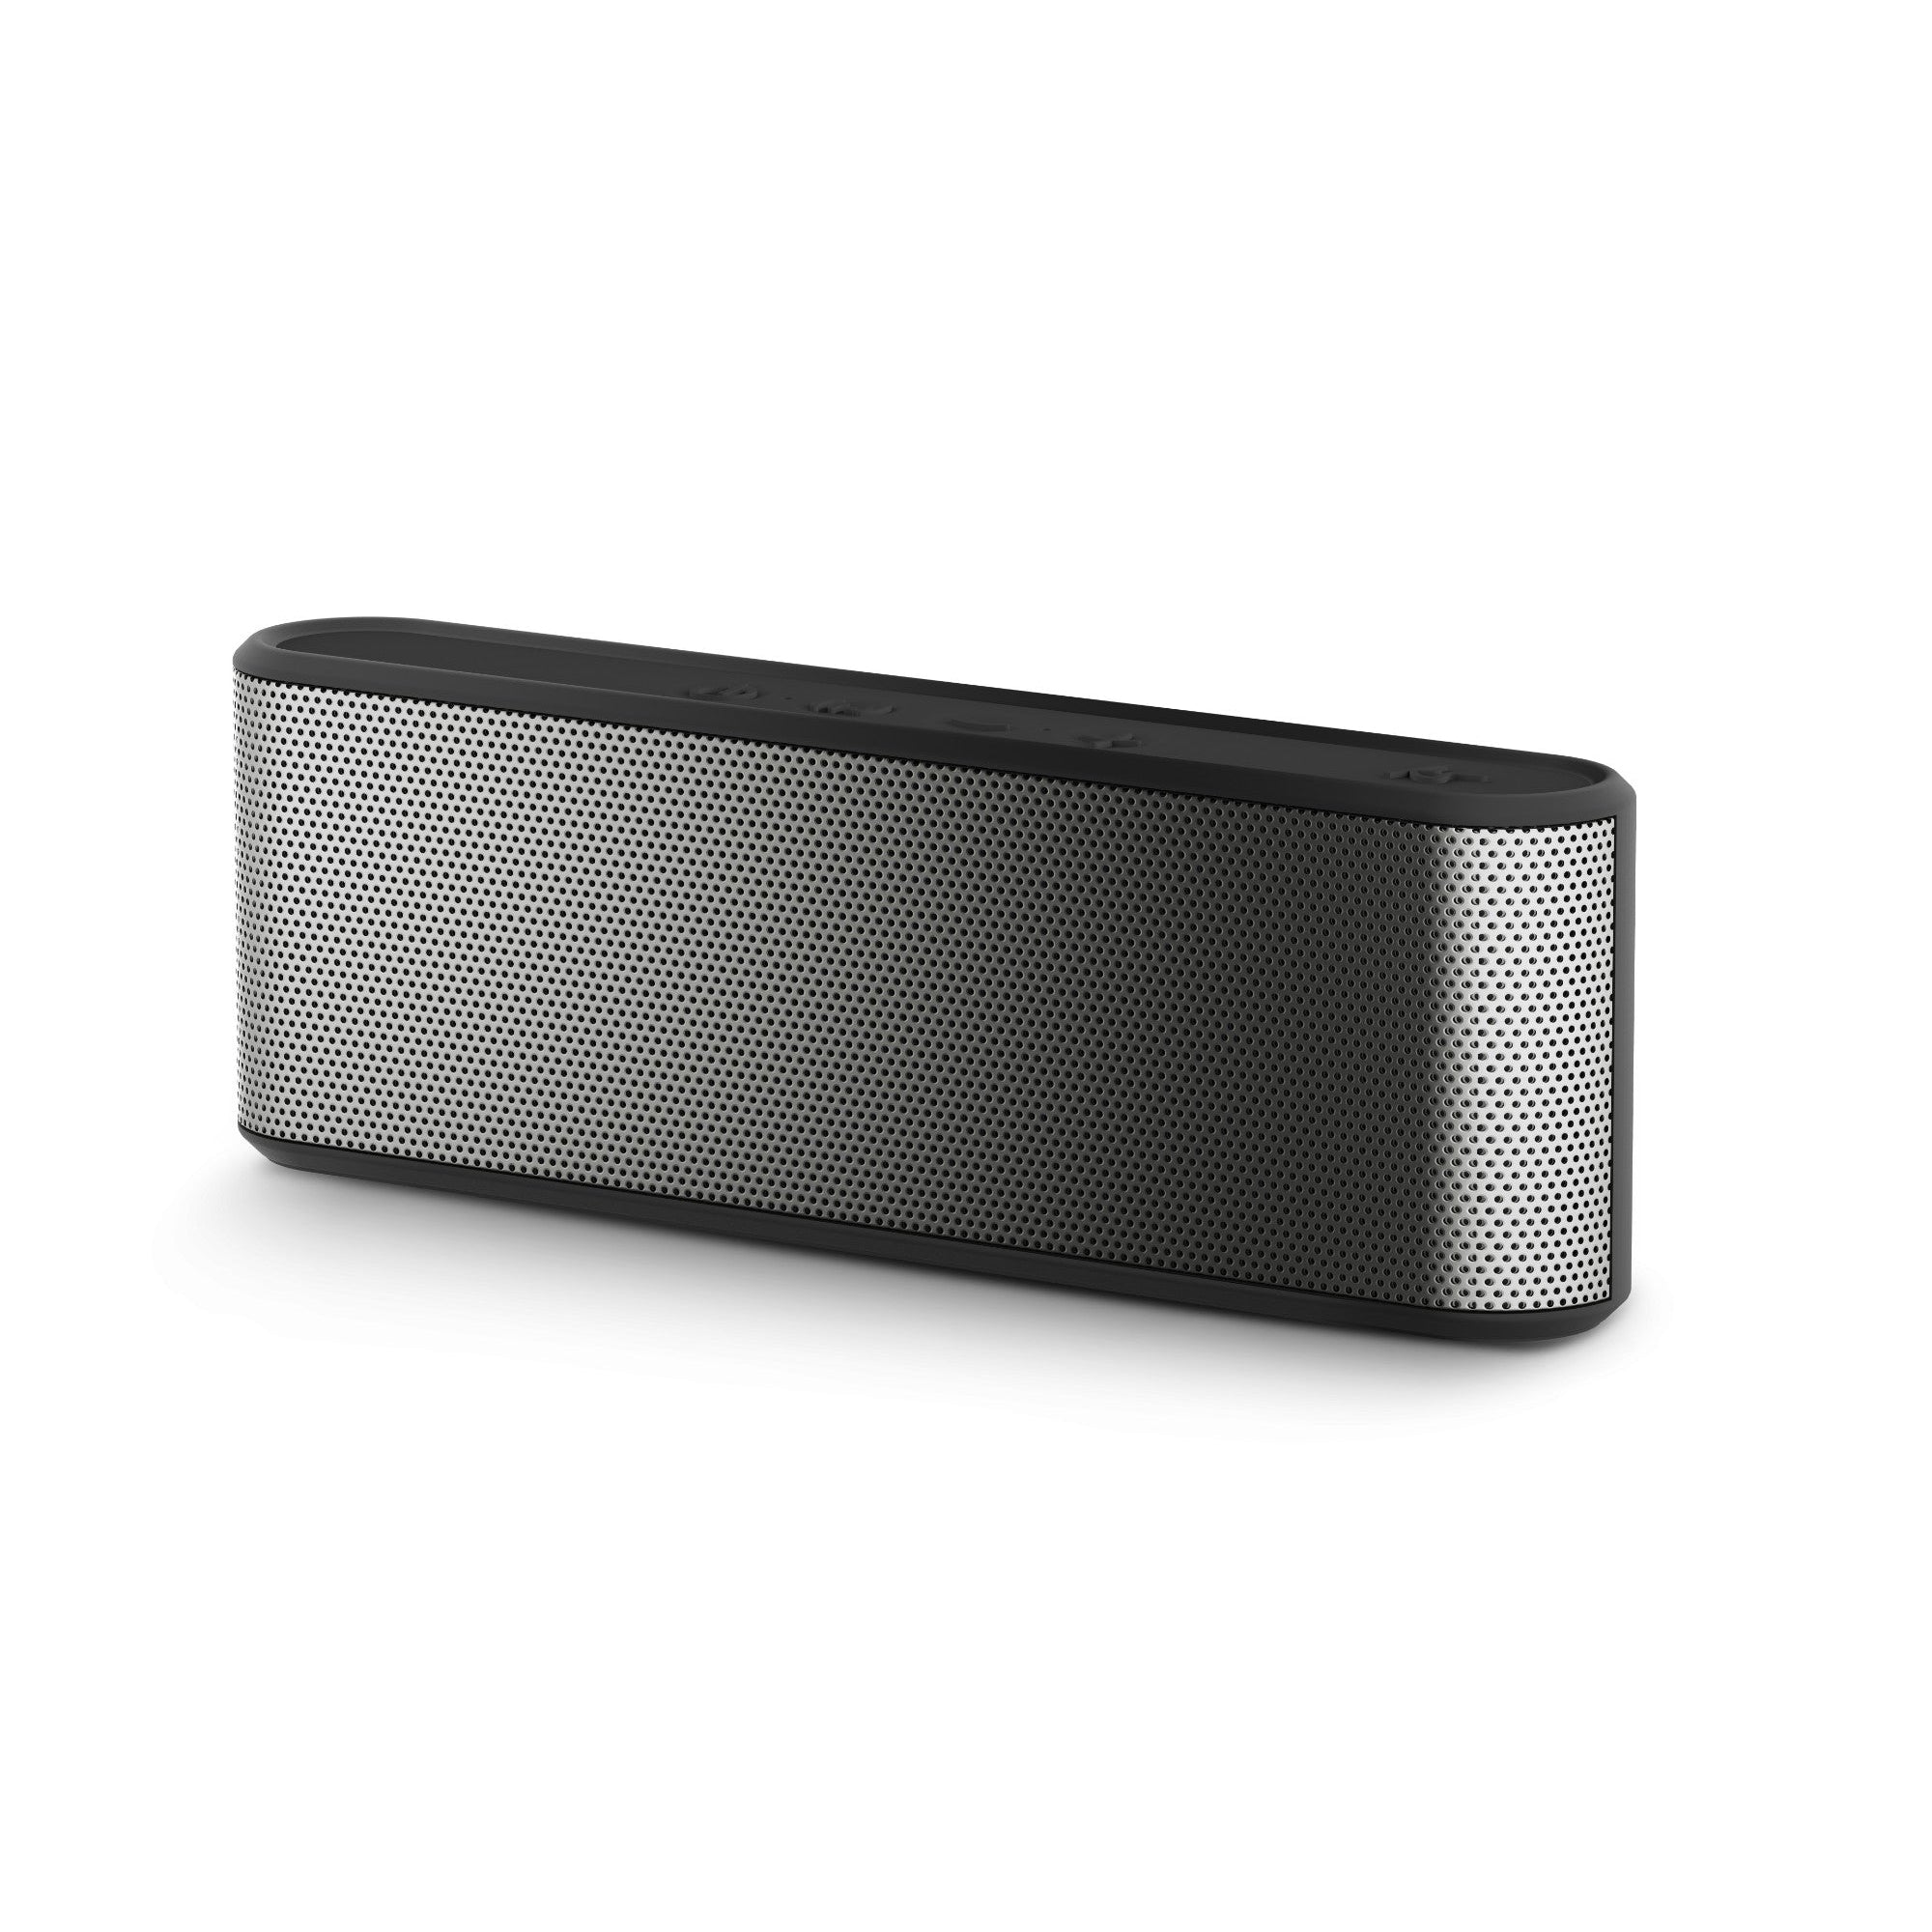 KitSound Boombar 30 Bluetooth Speaker - Black - Refurbished Excellent